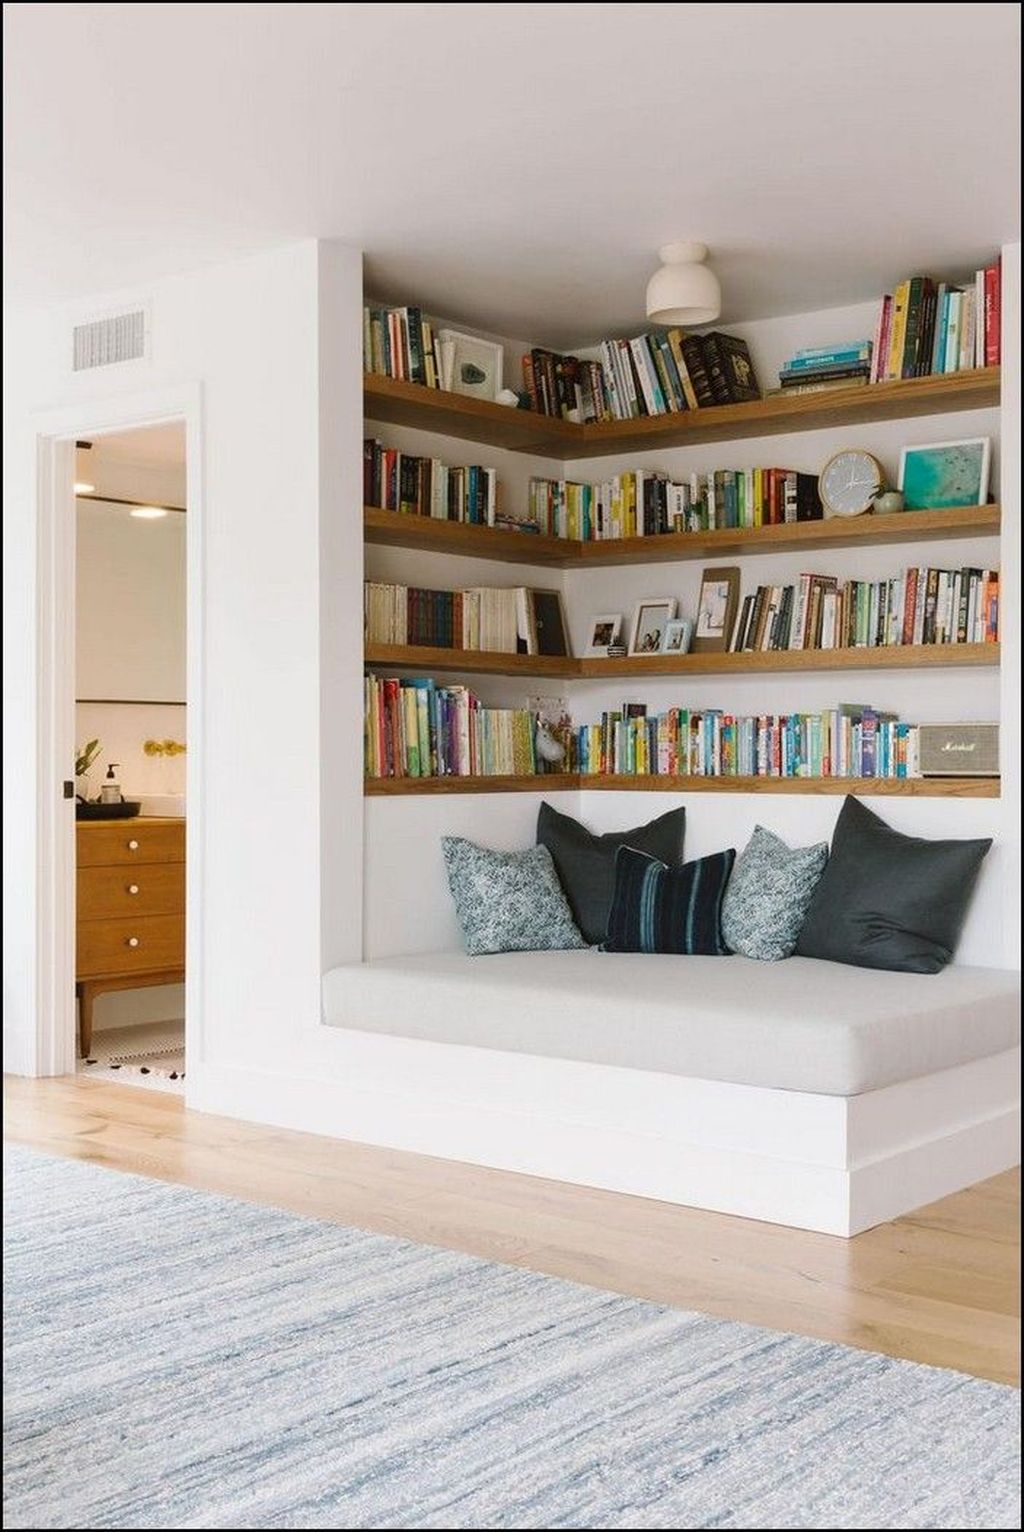 Minimalist Home Interior Design Ideas With A Smart Living Concept44